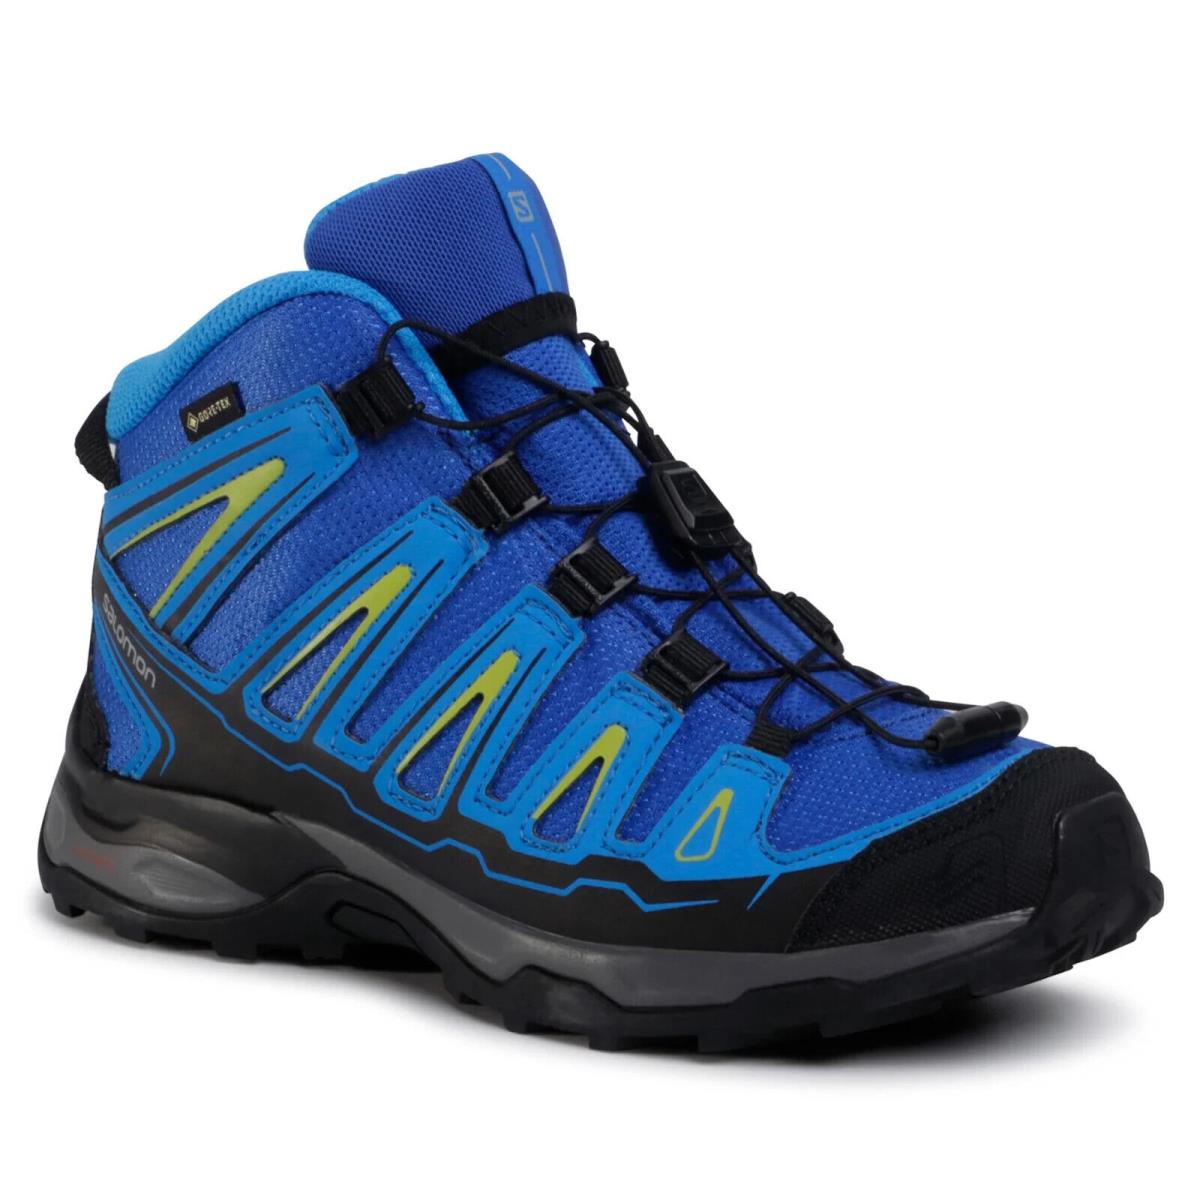 Salomon X-ultra Mid Gtx J Gore-tex Waterproof Unisex Shoes 390294 Size 4